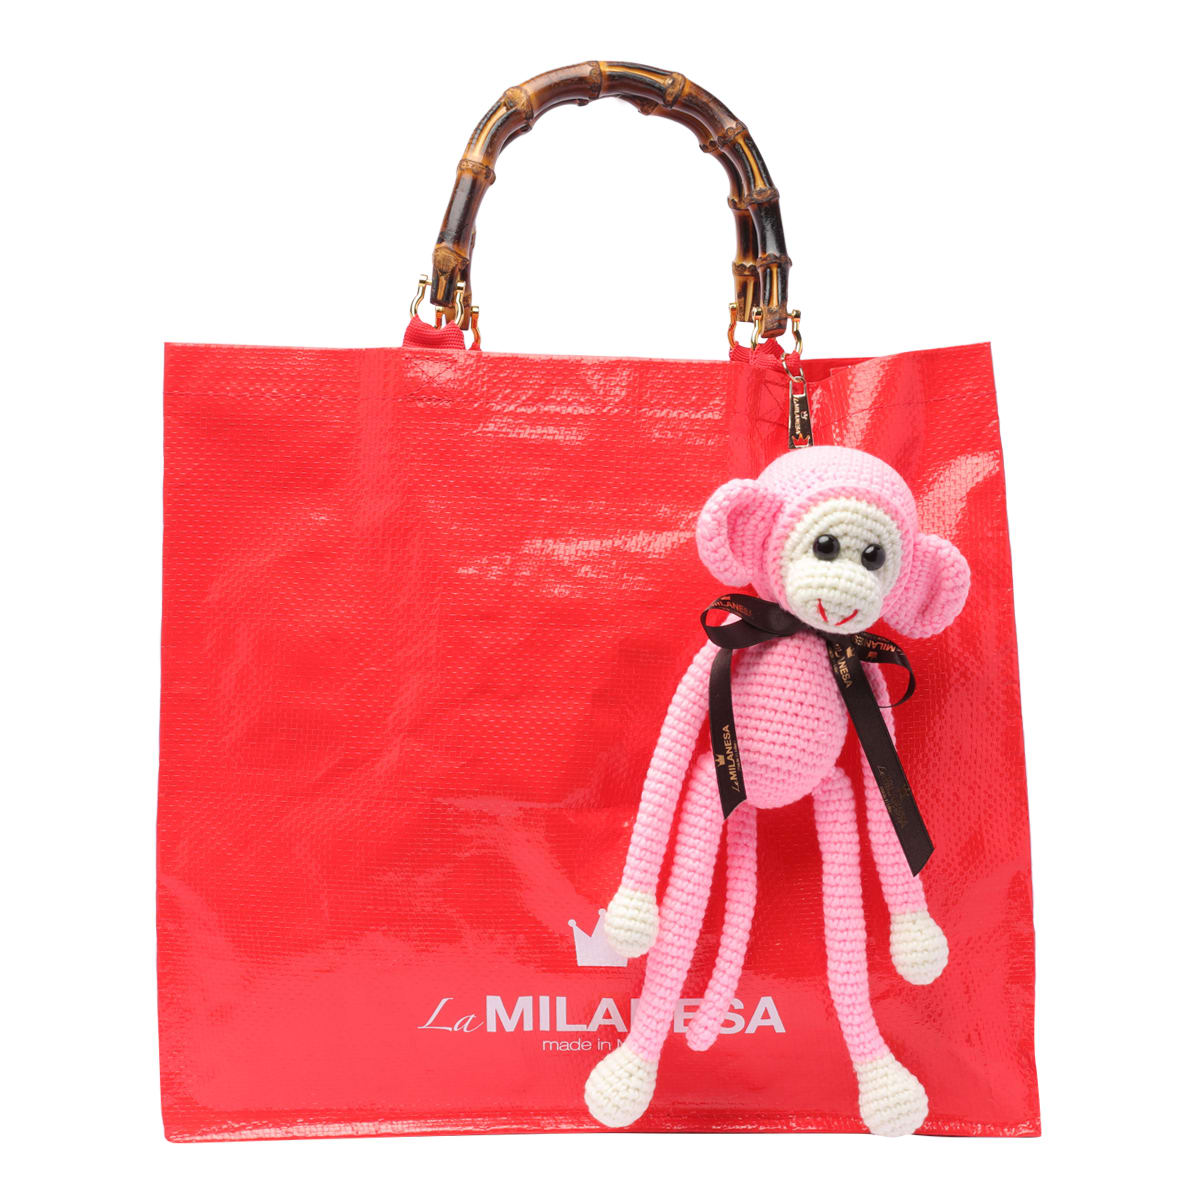 Lamilanesa Sbagliato Shopping Bag In Red